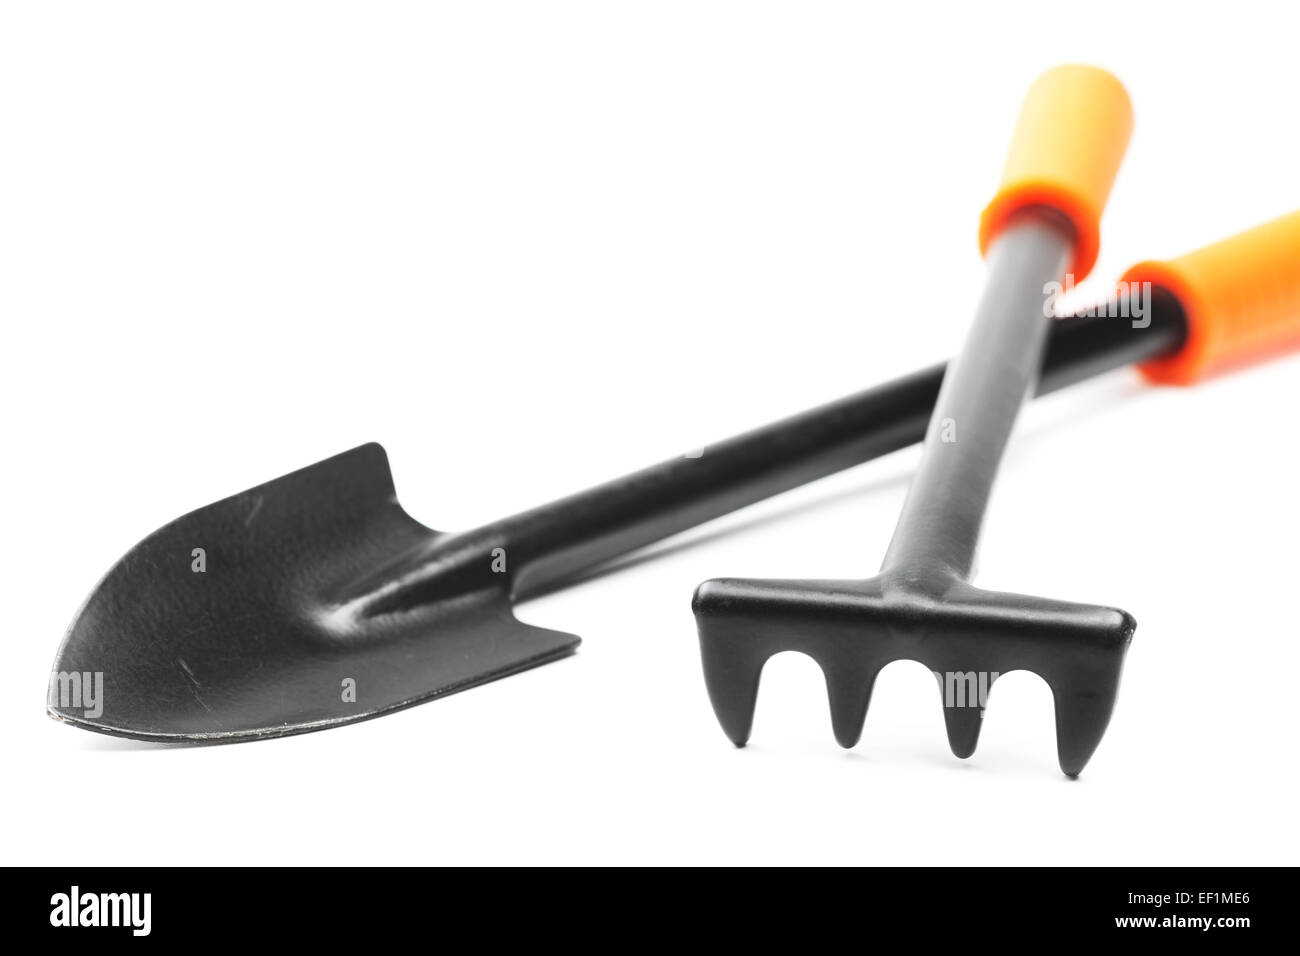 small garden tools: spade and rake on white Stock Photo